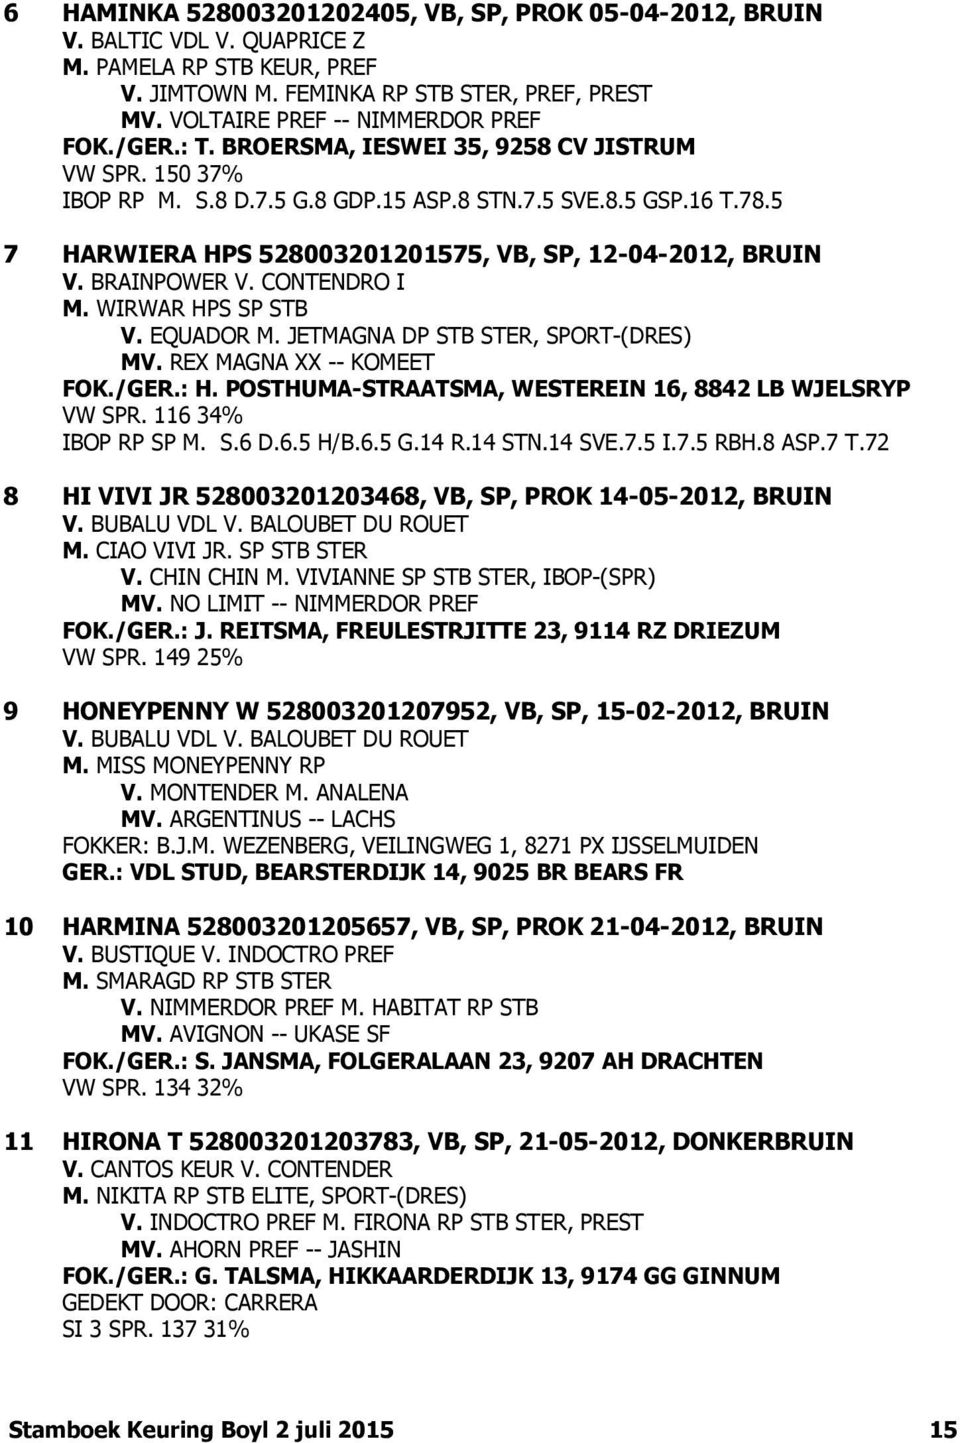 5 7 HARWIERA HPS 528003201201575, VB, SP, 12-04-2012, BRUIN V. BRAINPOWER V. CONTENDRO I M. WIRWAR HPS SP STB V. EQUADOR M. JETMAGNA DP STB STER, SPORT-(DRES) MV. REX MAGNA XX -- KOMEET FOK./GER.: H.